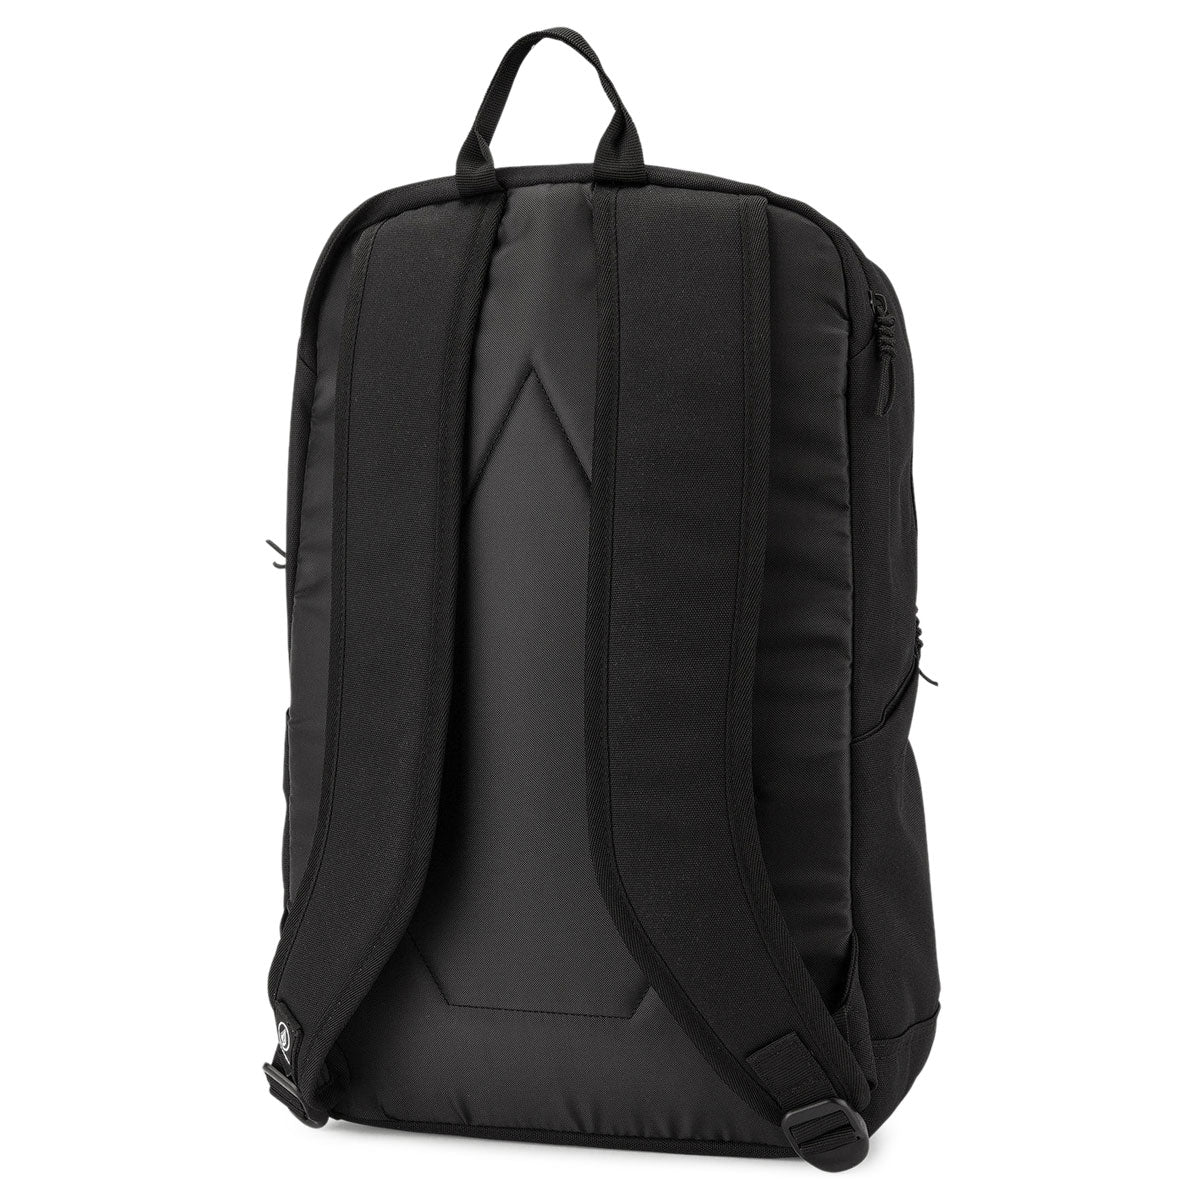 Volcom School Backpack - Black On Black image 2